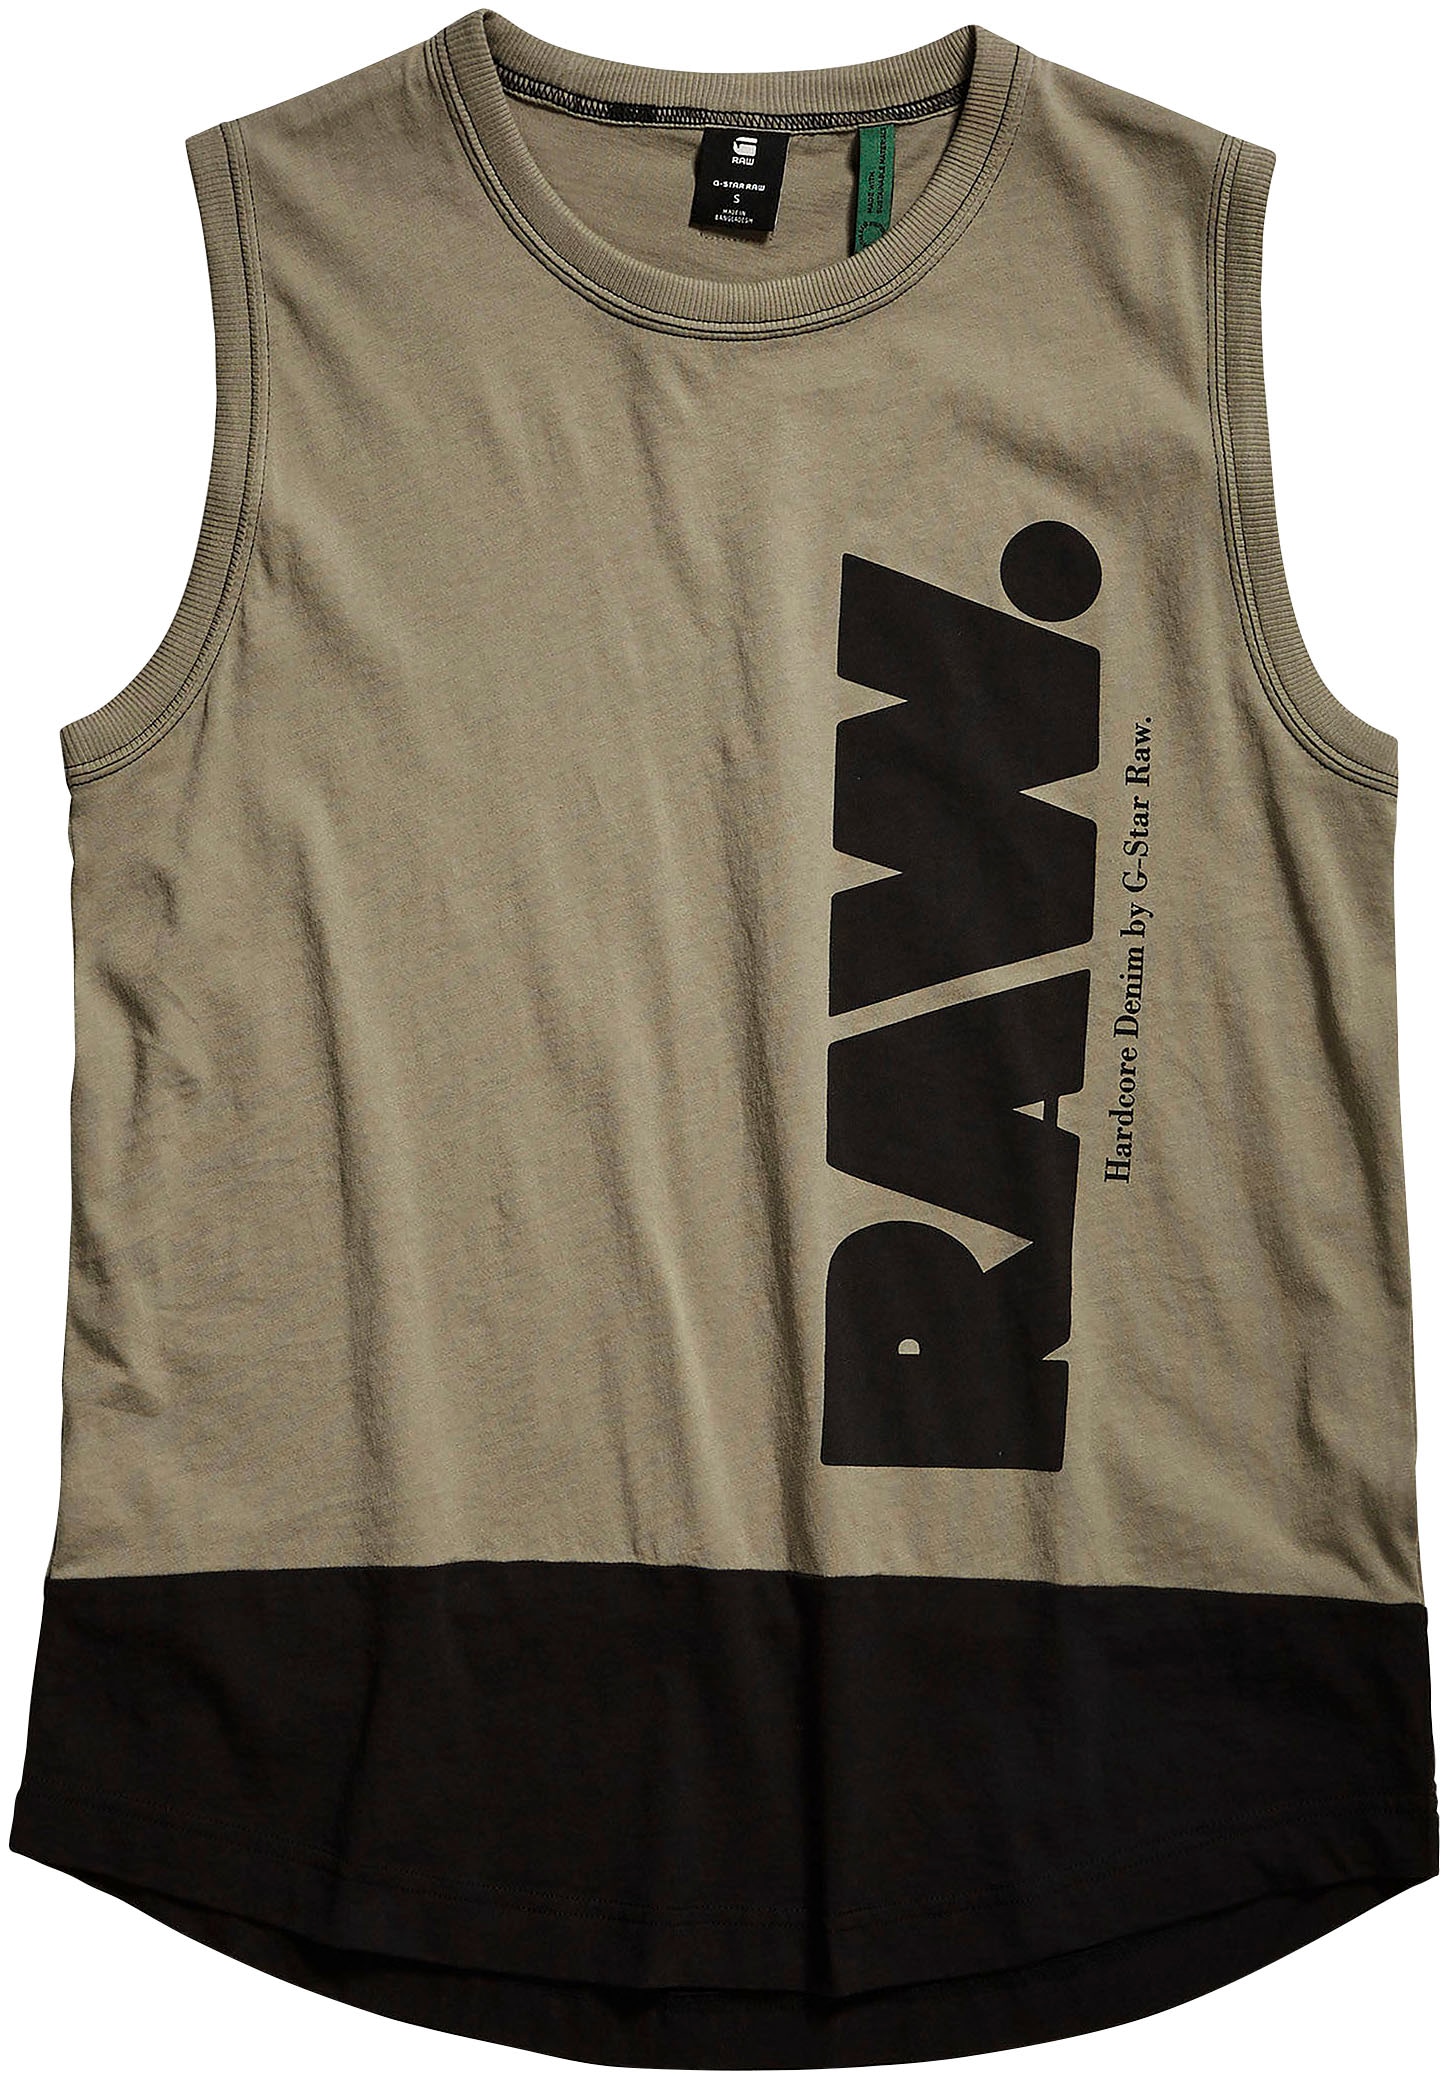 G-Star RAW ♕ block mti Logo color T-Shirt bei tank vorne »T-Shirt Grafikdruck to«, Lash